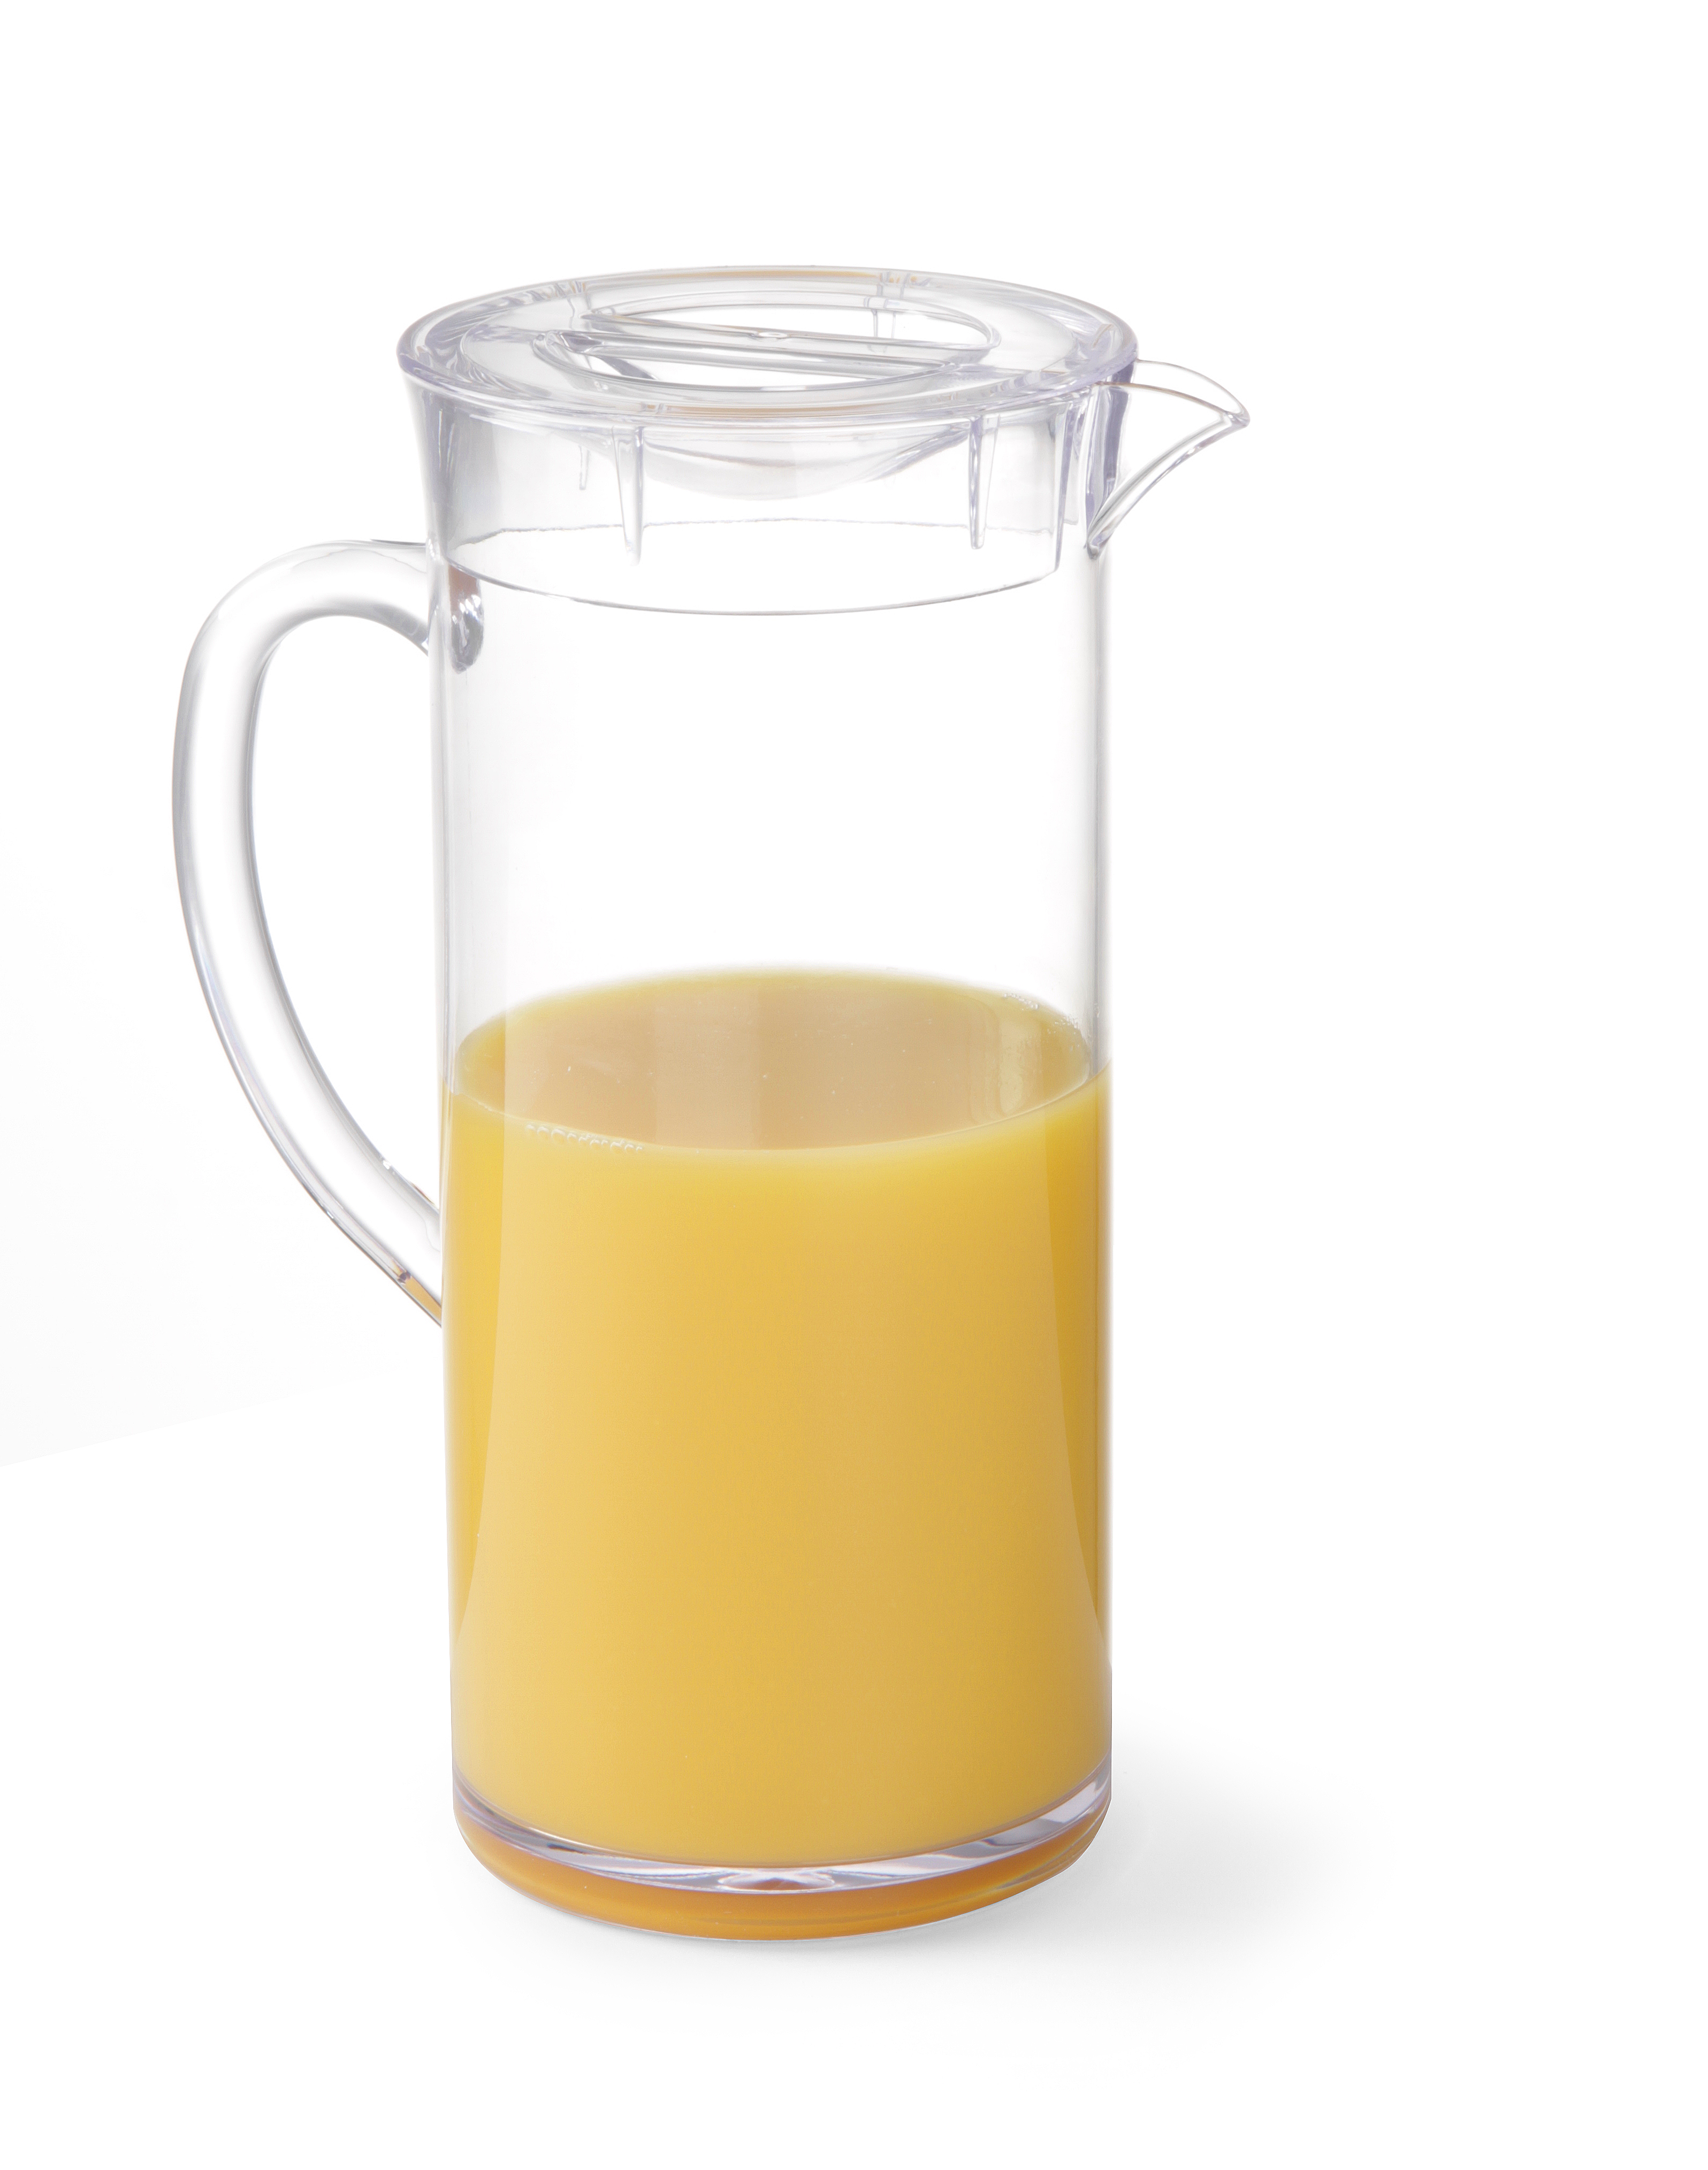 Juice jug - HENDI Tools for Chefs